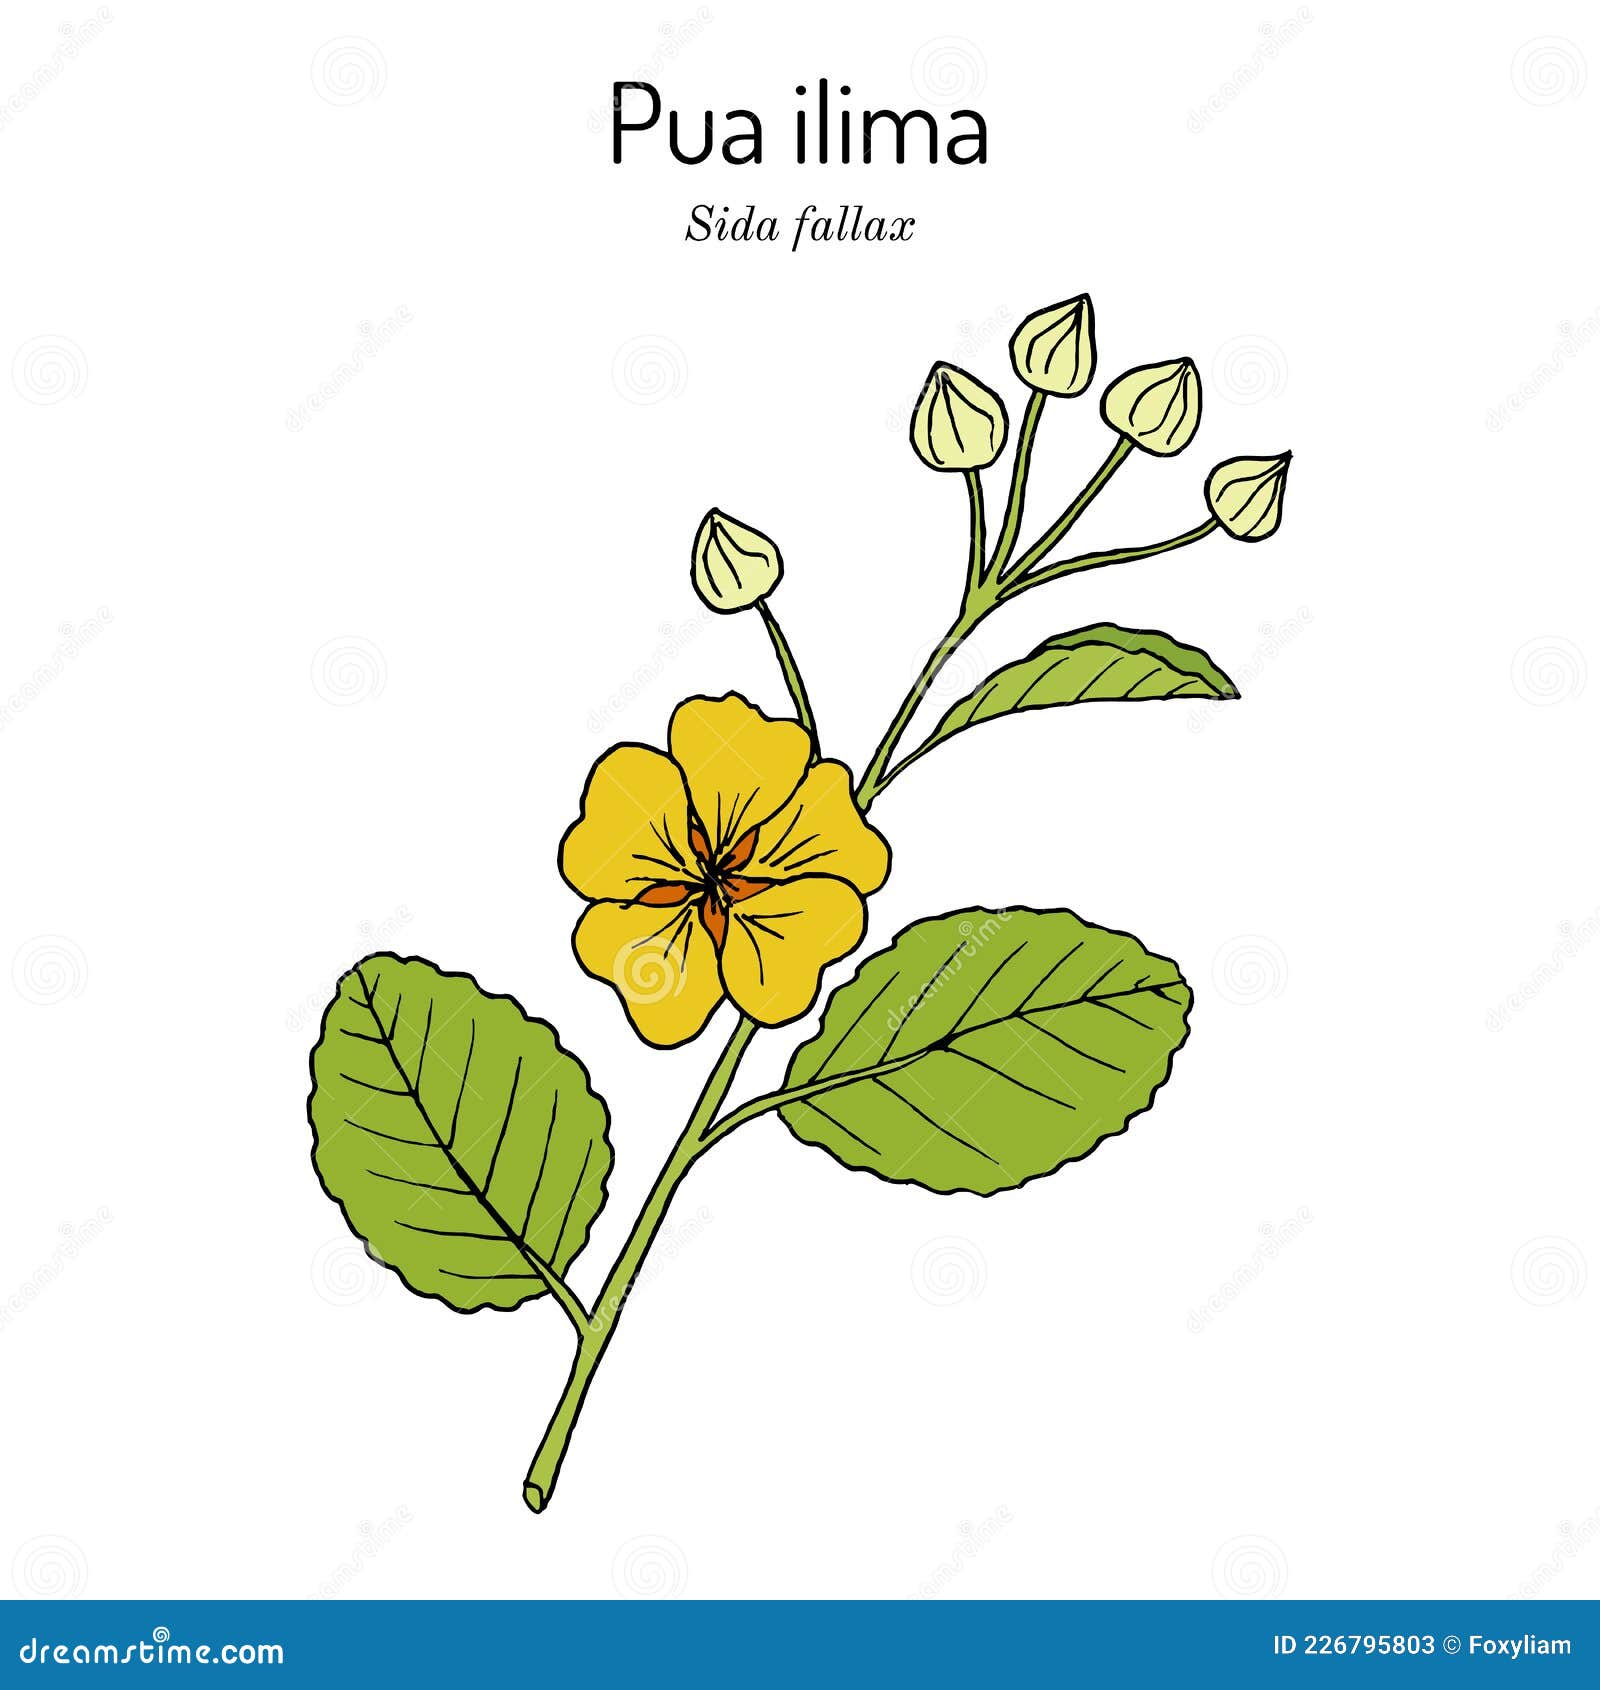 pua ilima, sida fallax , state flower of the island of oahu hawaii